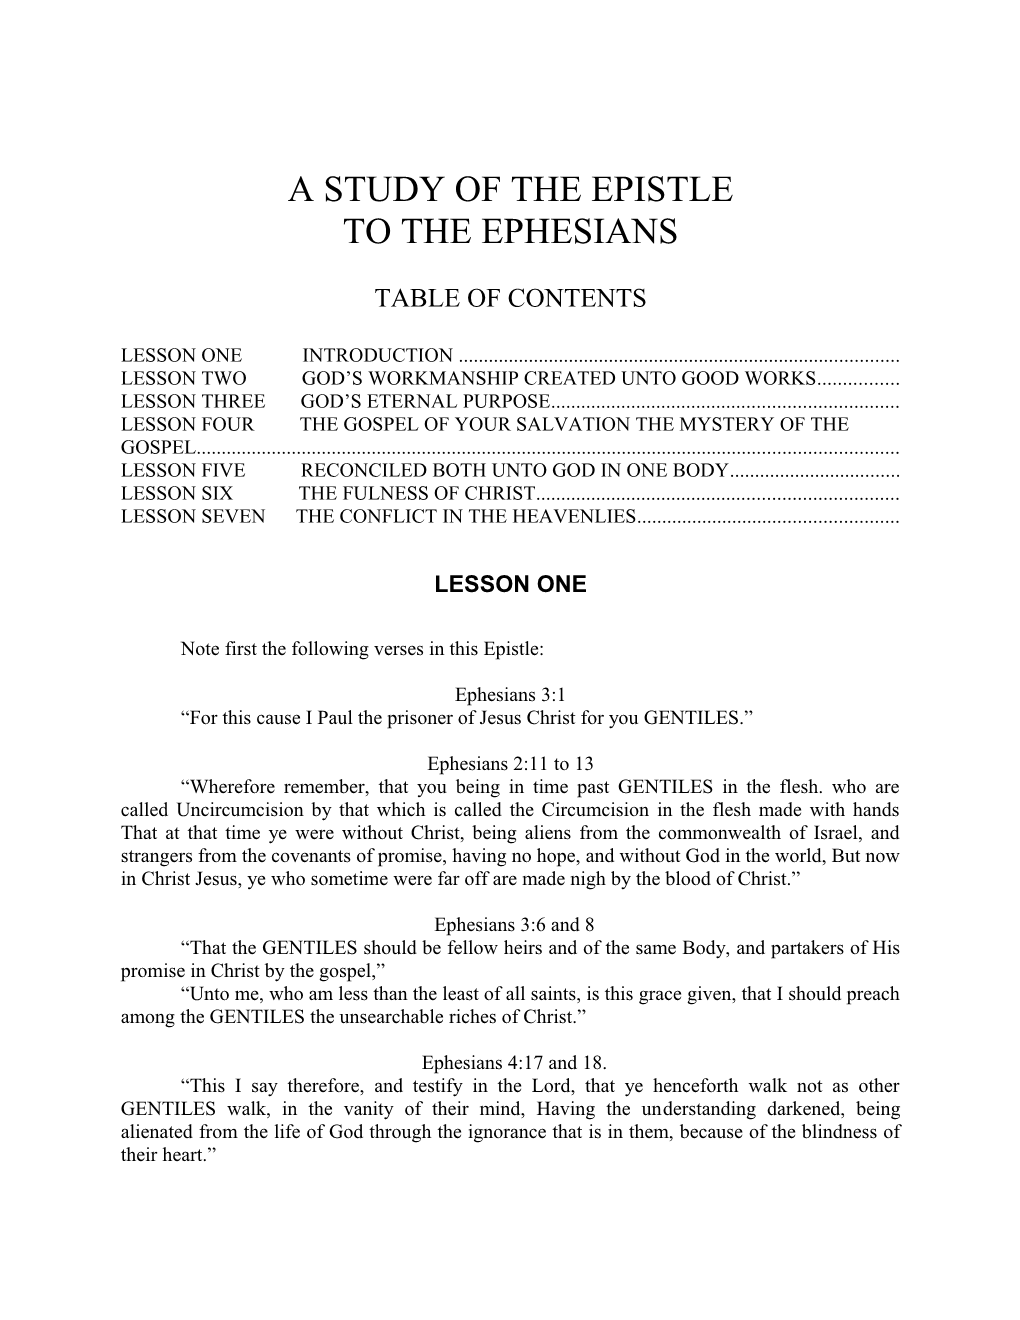 A Study of the Epistle to the Ephesians